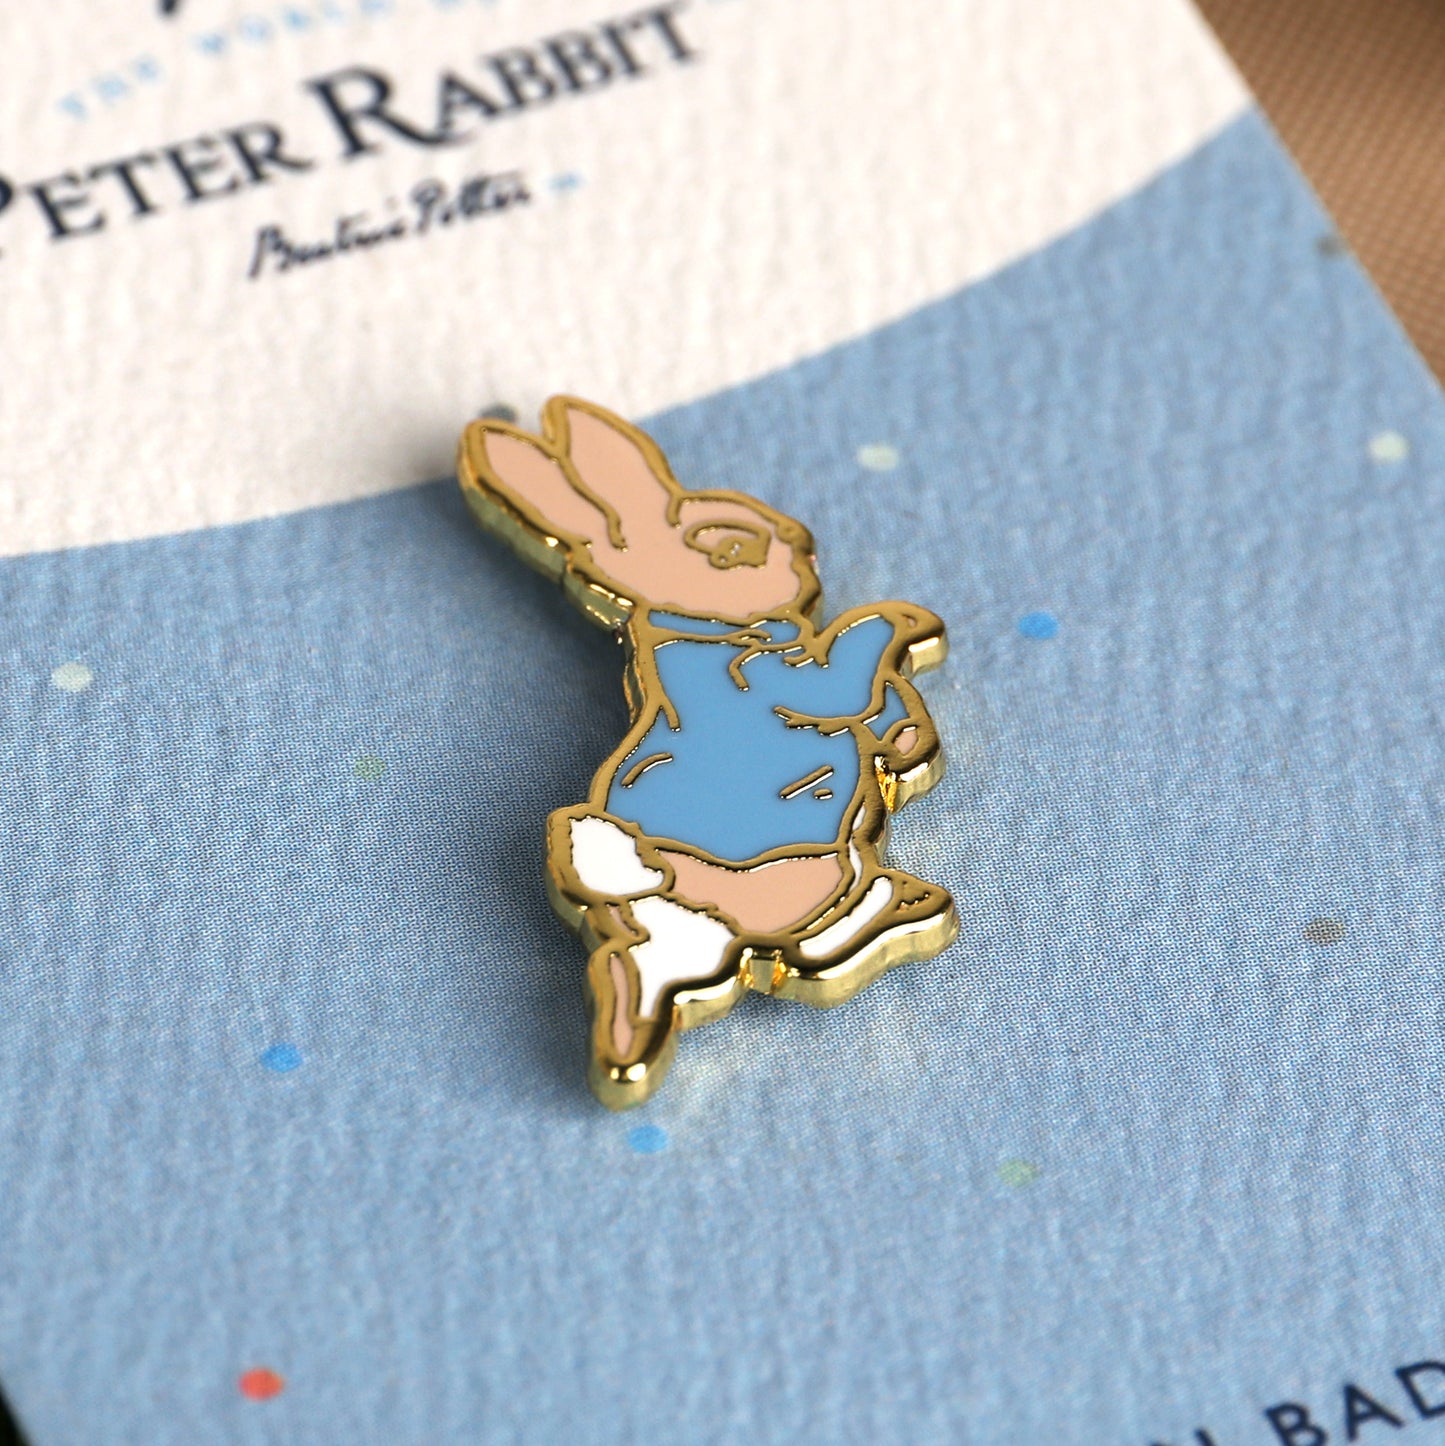 Peter Rabbit Pin Badge - Beatrix Potter